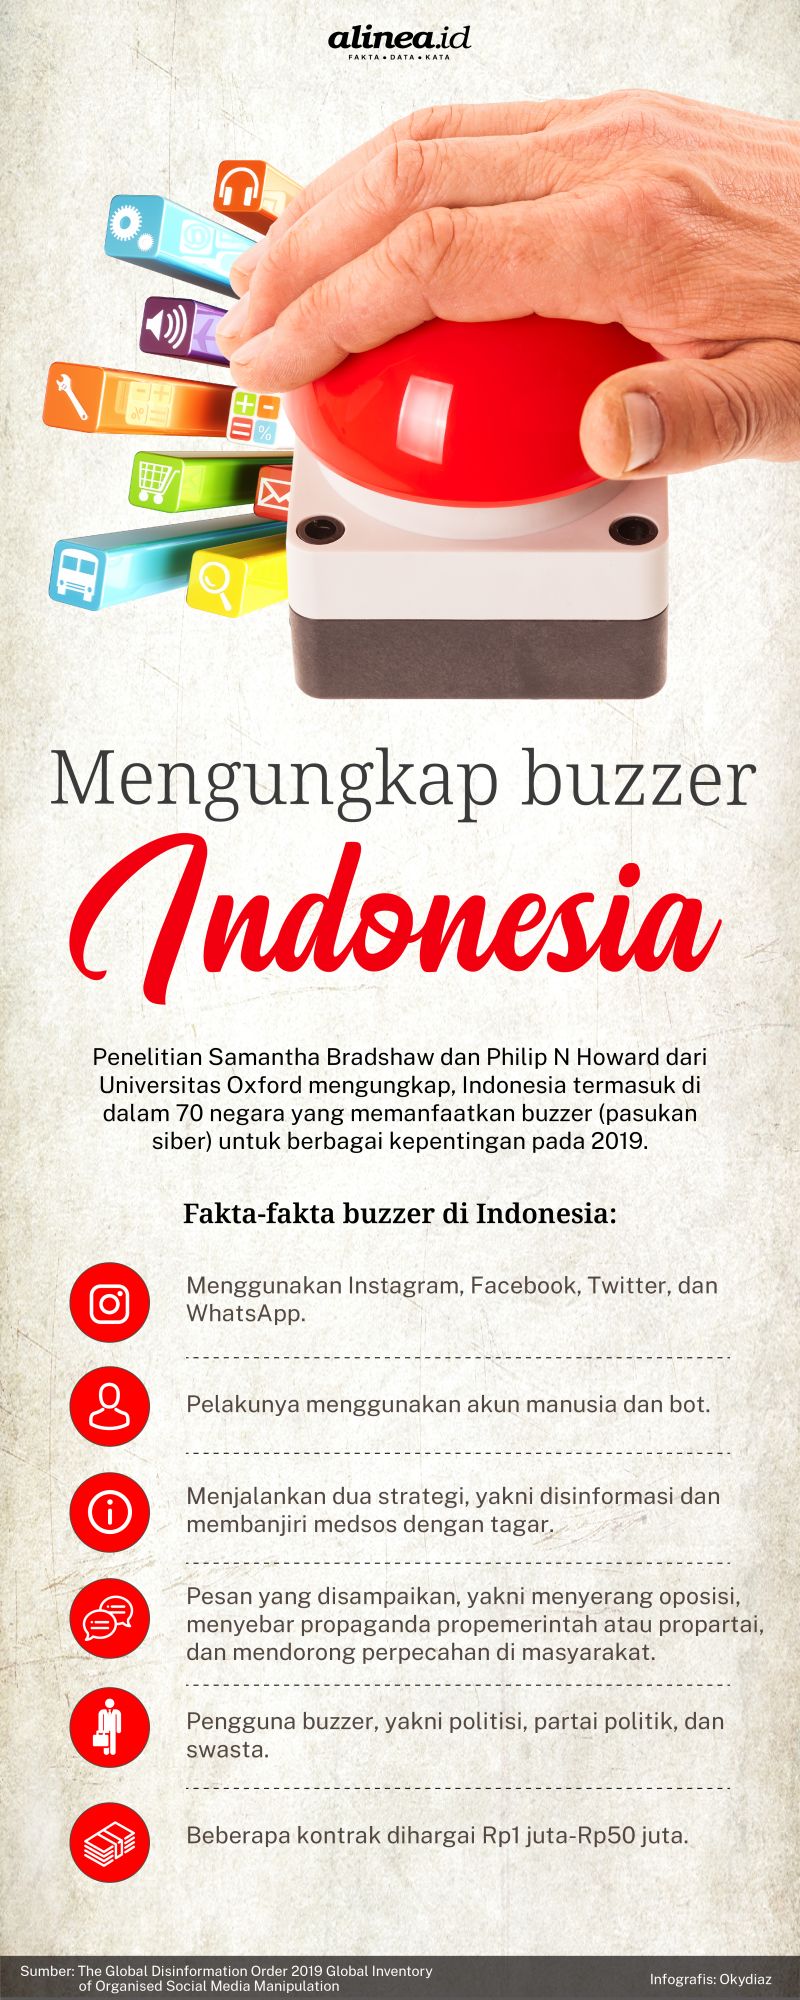 Buzzer di Indonesia bekerja menggunakan Facebook, Twitter, Instagram, dan WhatsApp. Alinea.id/Oky Diaz.